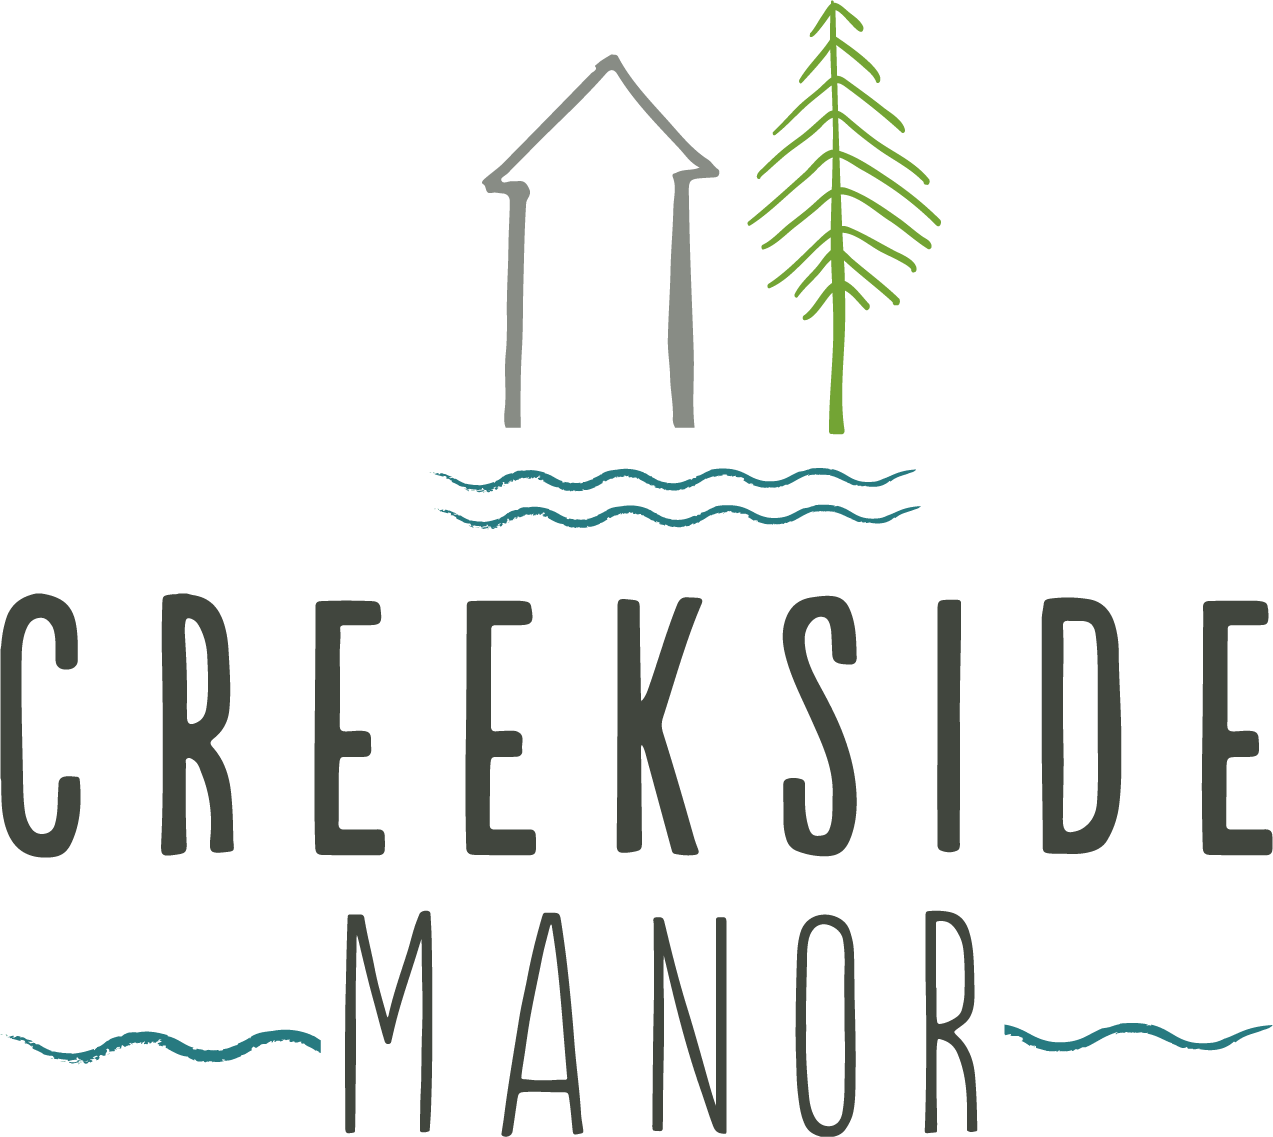 Creekside Manor Logo